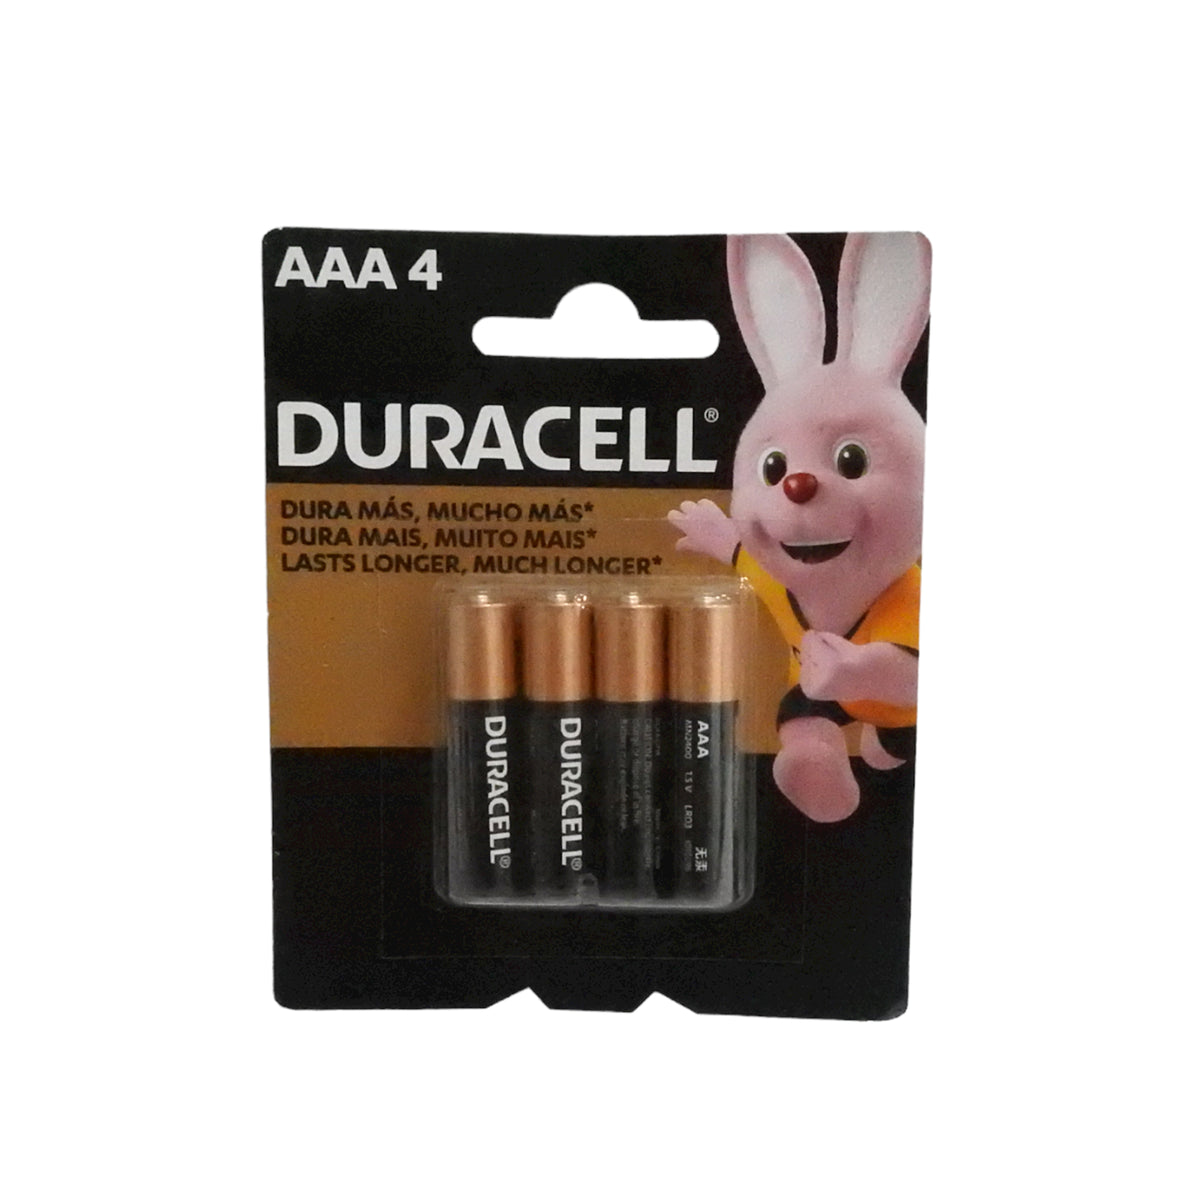 Duracell aaa pila alcalina x 4 unidades — Amarket